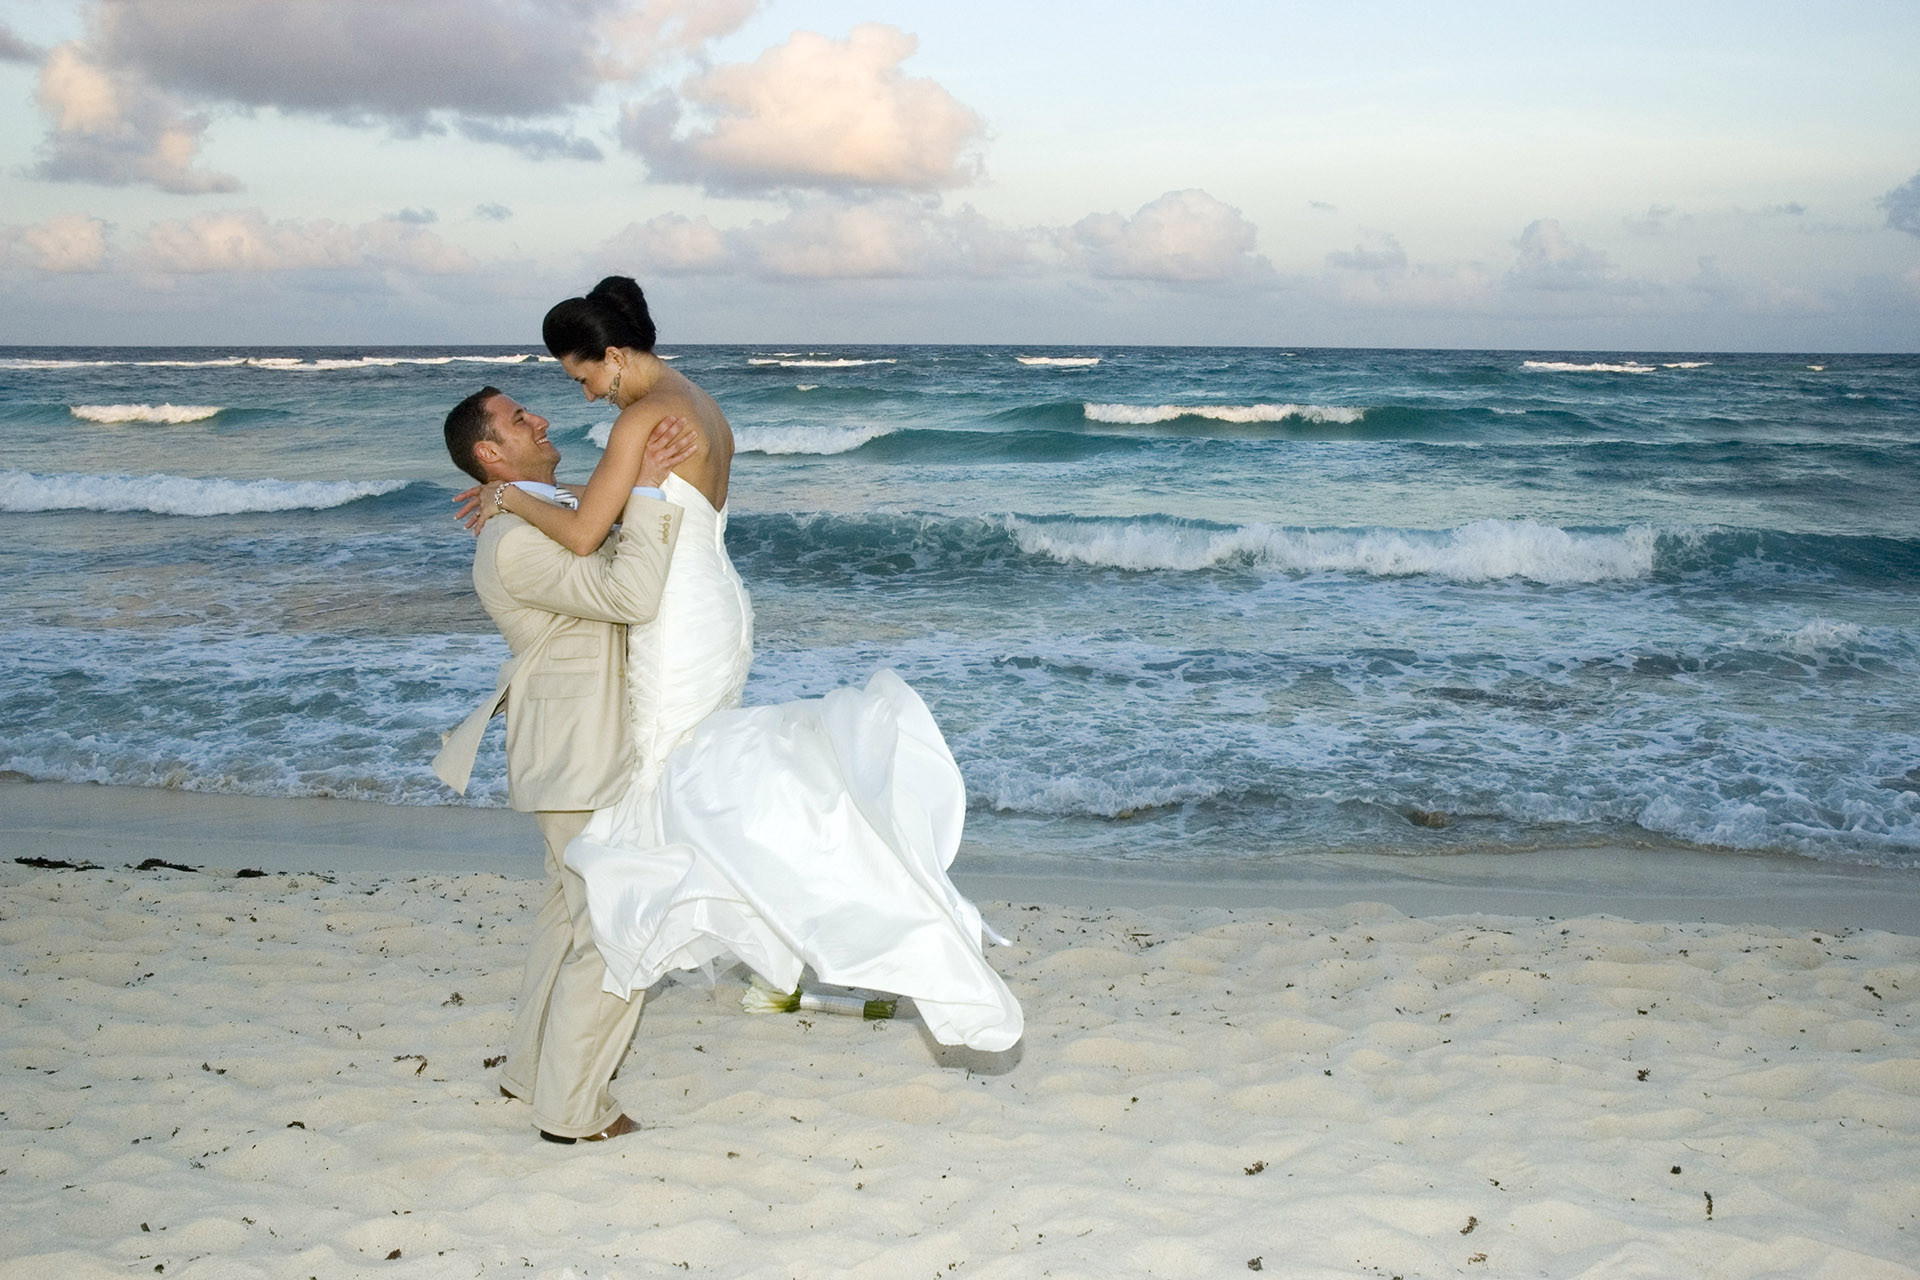 Beach Weddings Destin Fl
 Destin FL Beach Weddings The Resorts of Pelican Beach